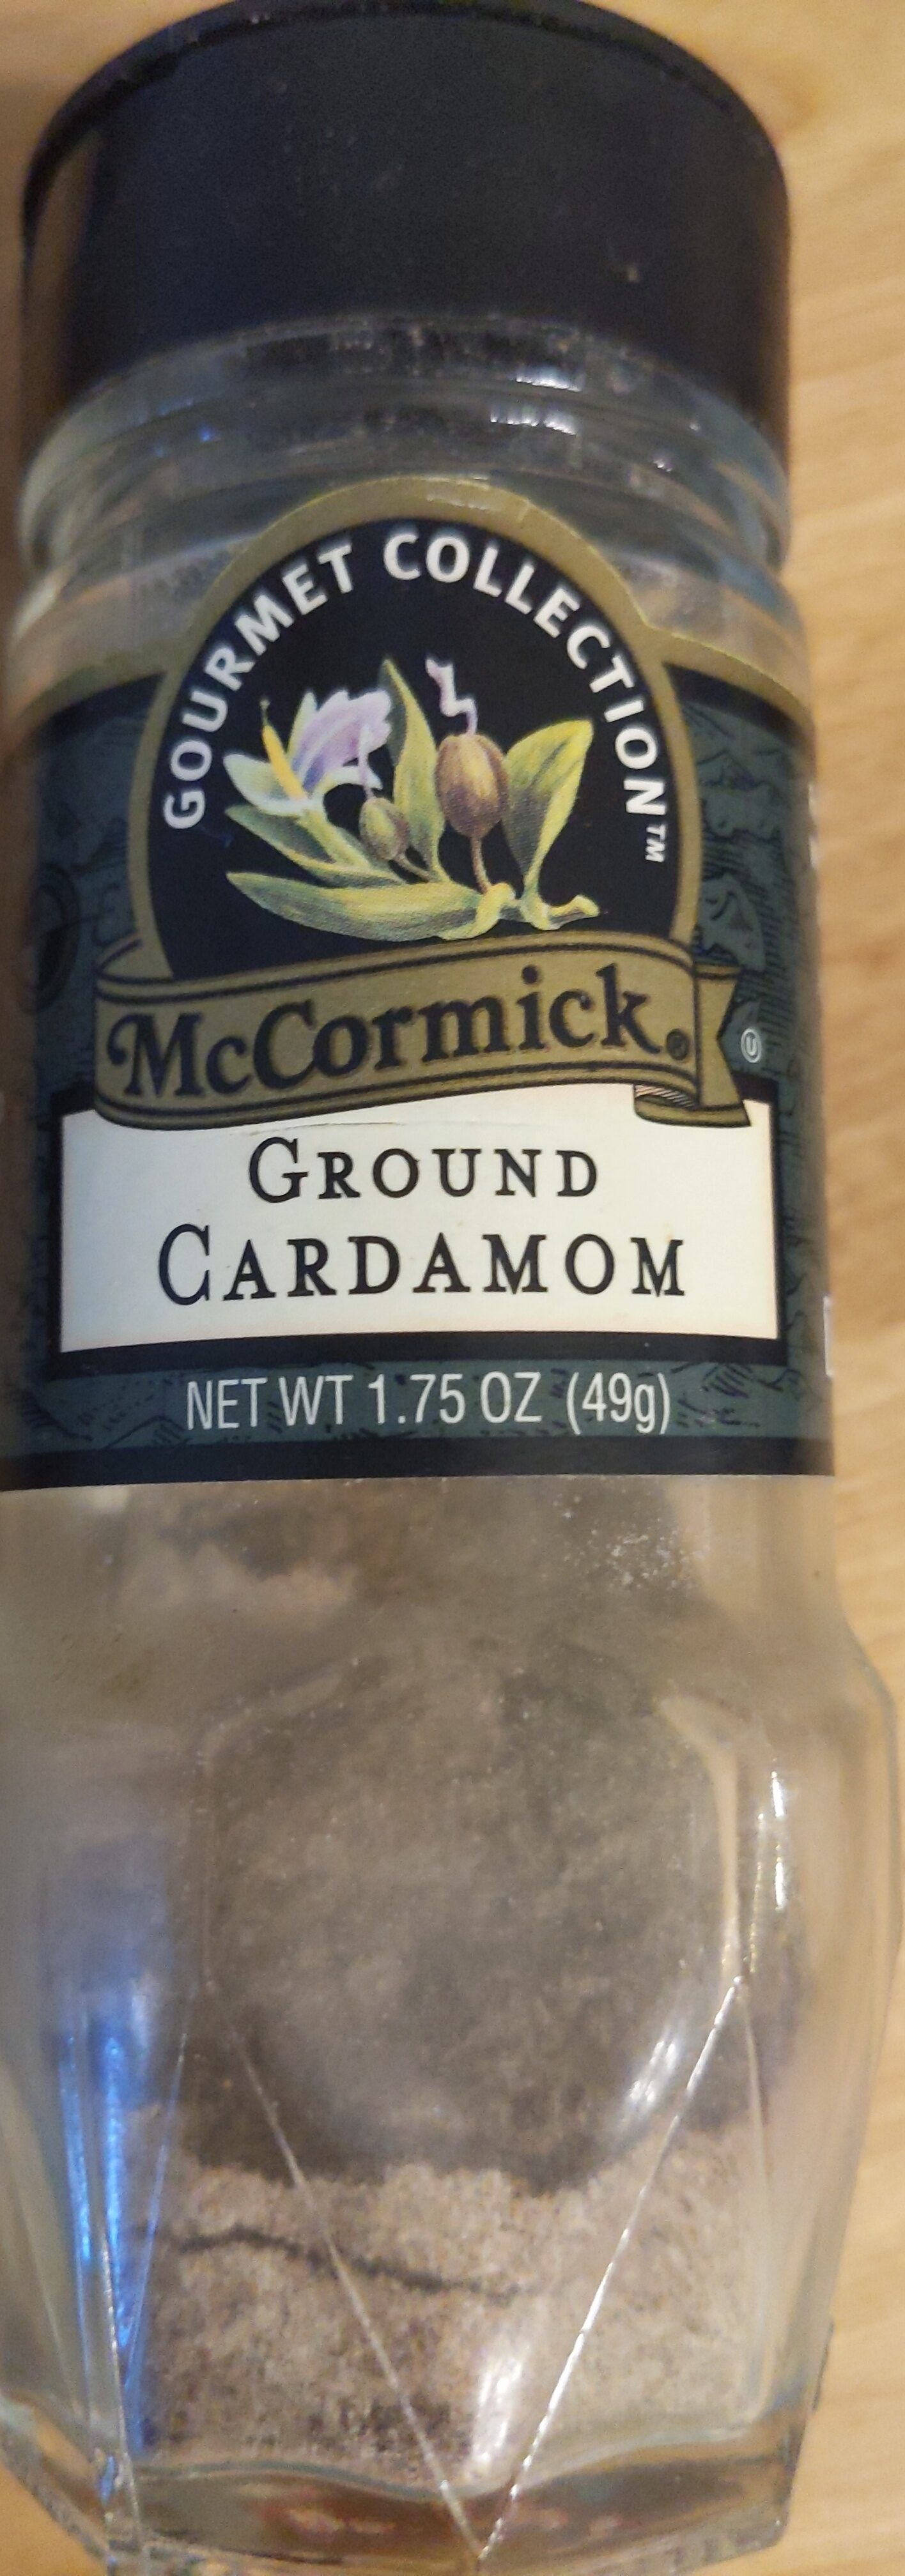 Ground Cardamom - Product